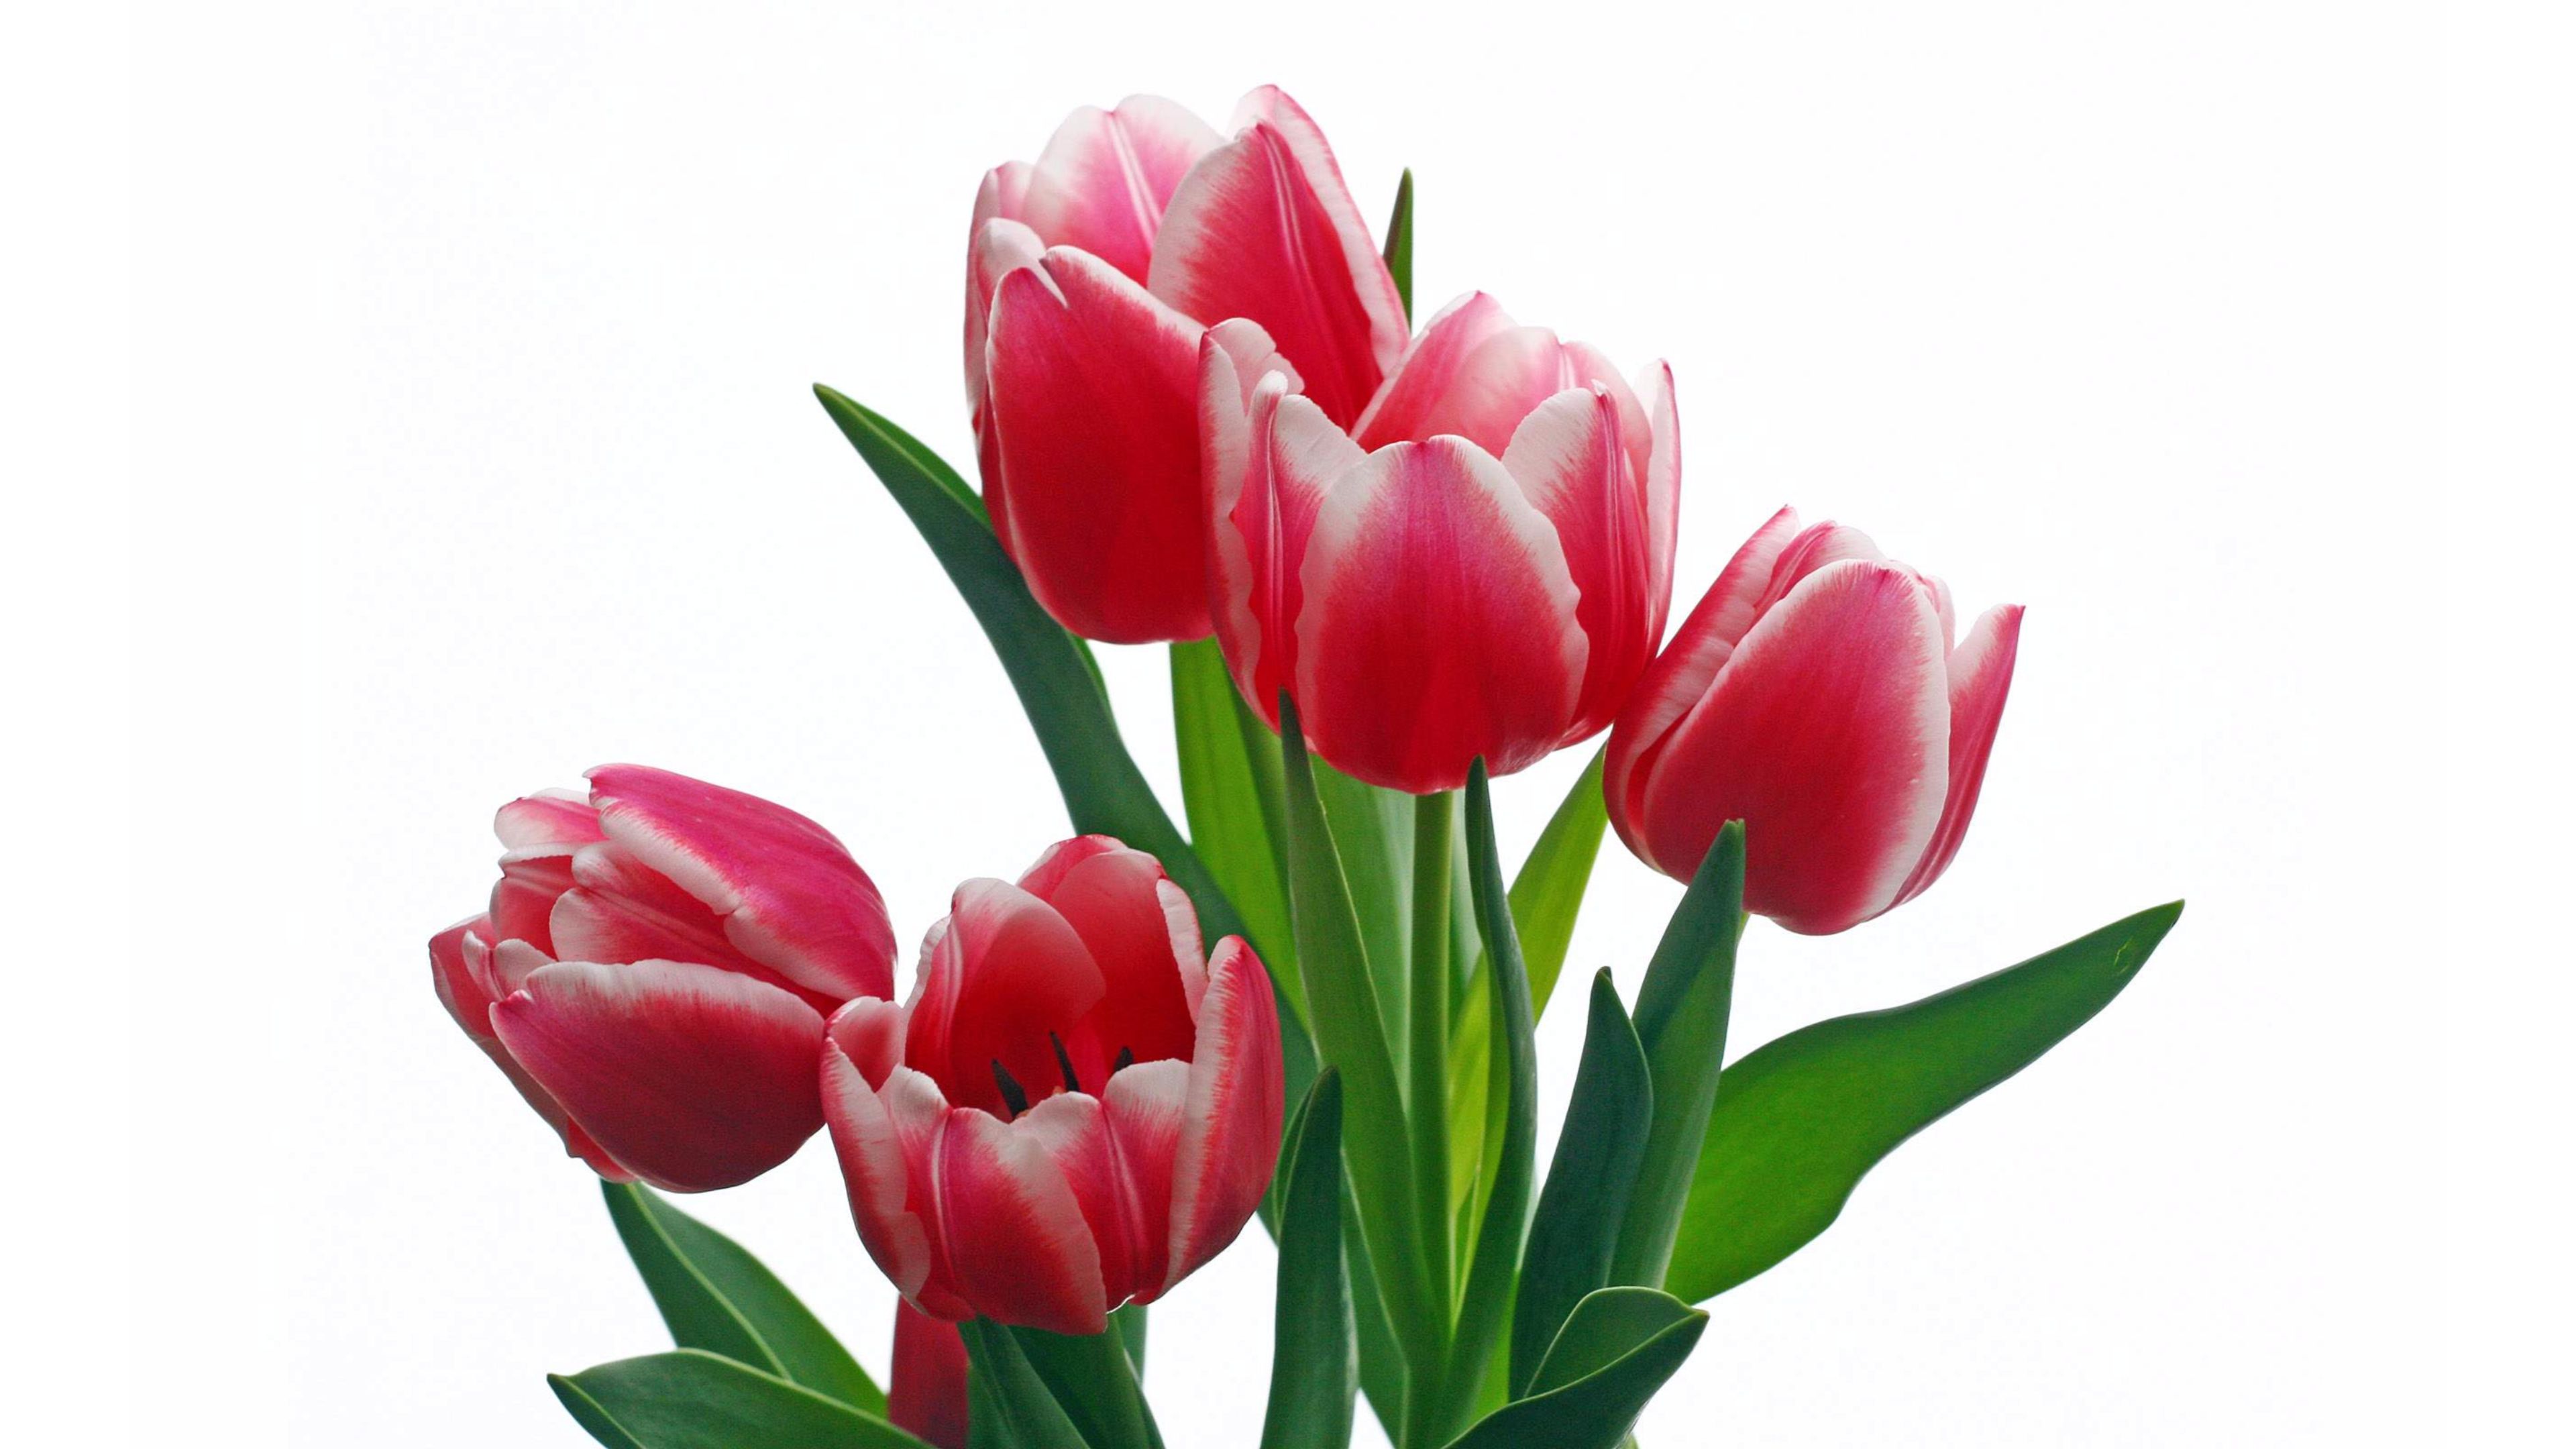 Pink Red Tulips wallpaper – wallpaper free download